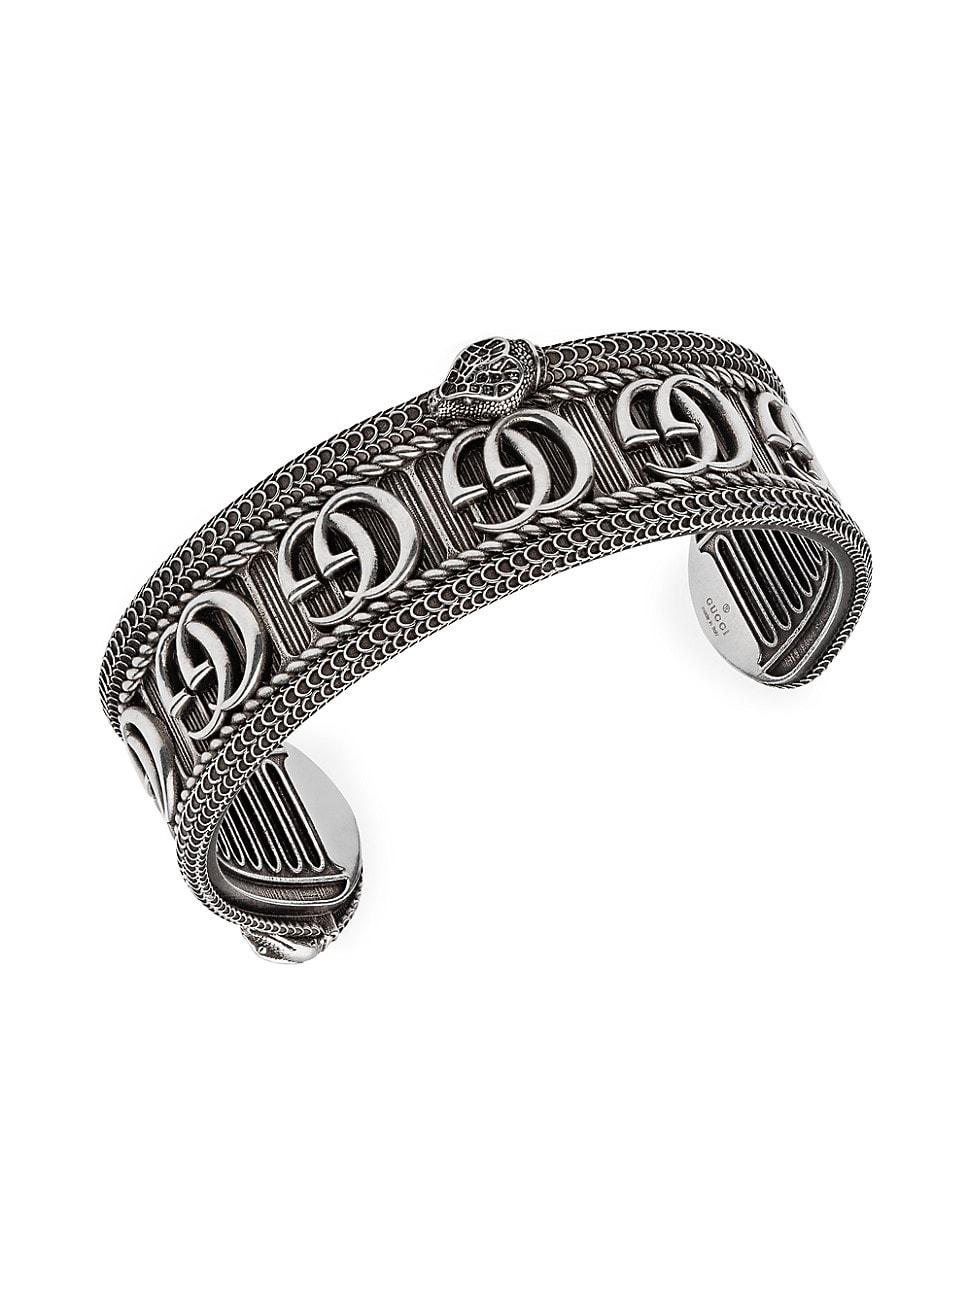 Gucci GG Marmont Silver Snake Bracelet in Metallic for Men - Lyst